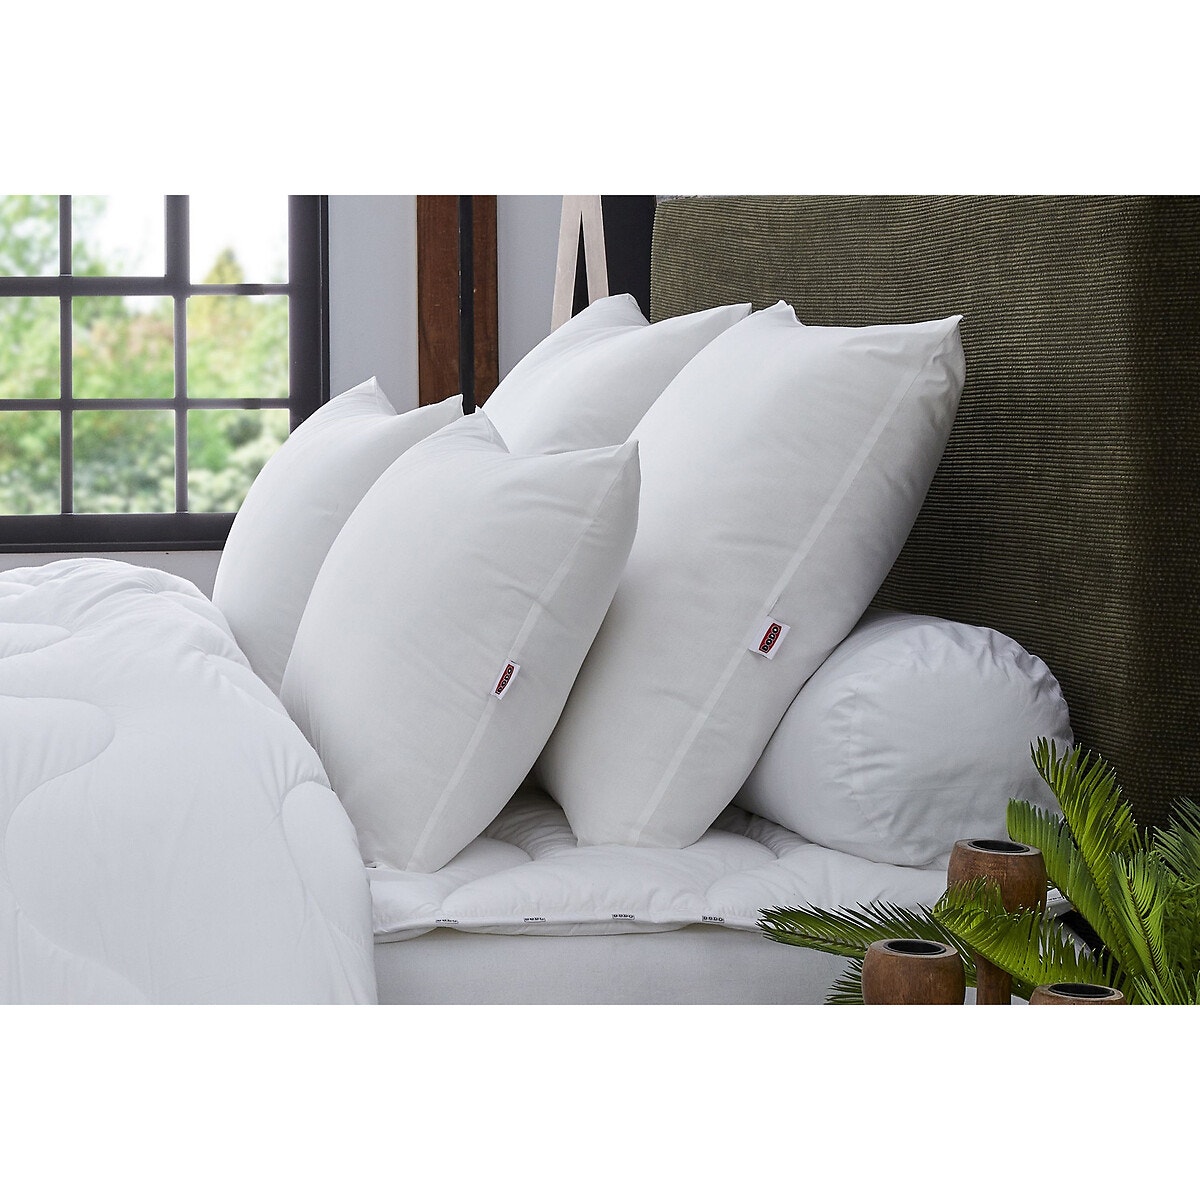 Oreiller blanc anti-acariens 60x60 cm DODO : l'oreiller à Prix